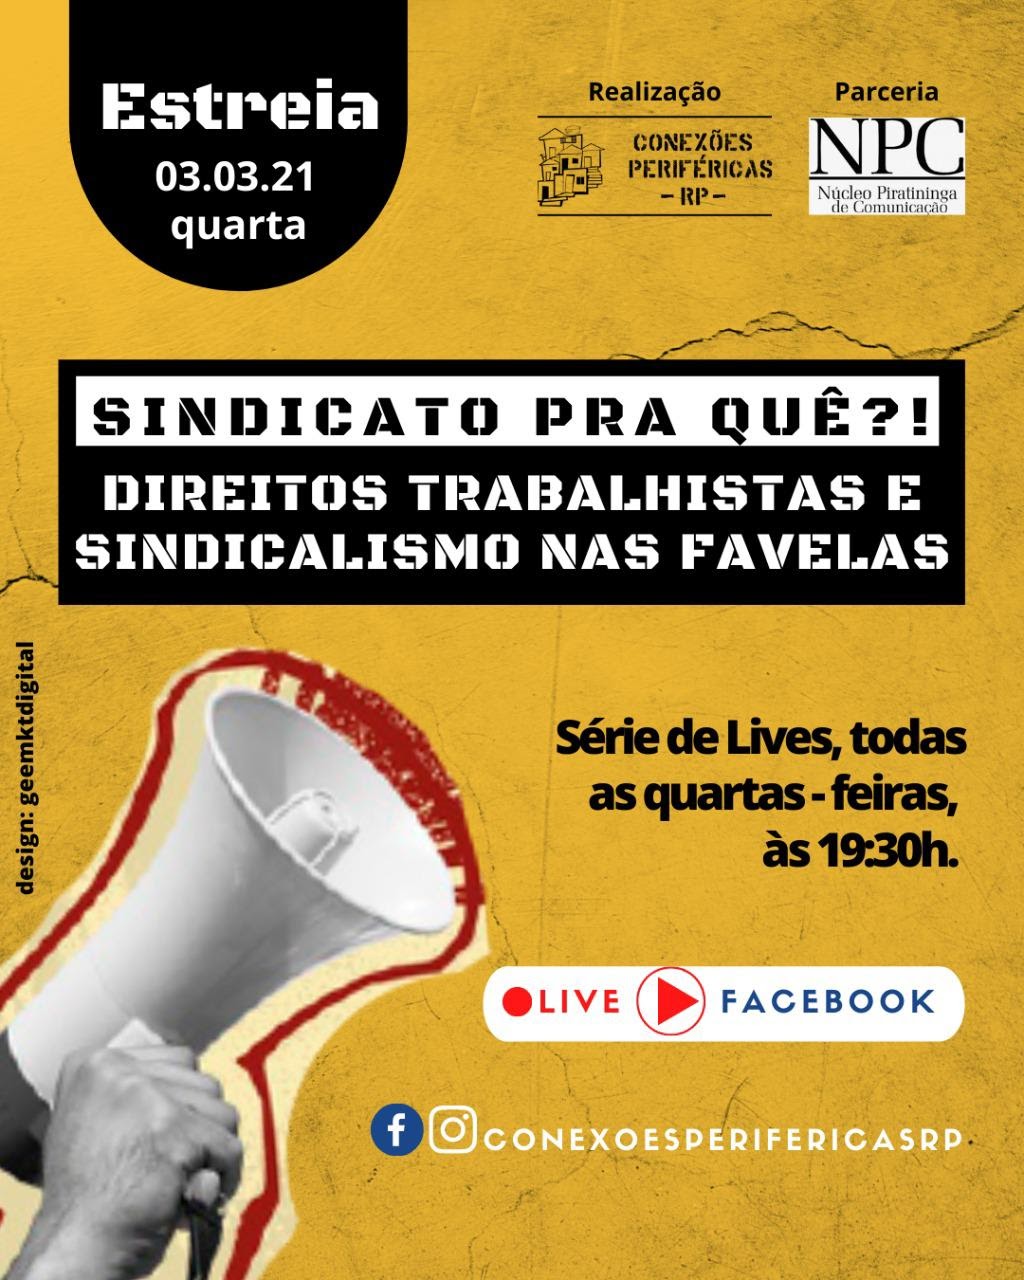 Convite especial. Debater sindicalismo nas favelas.